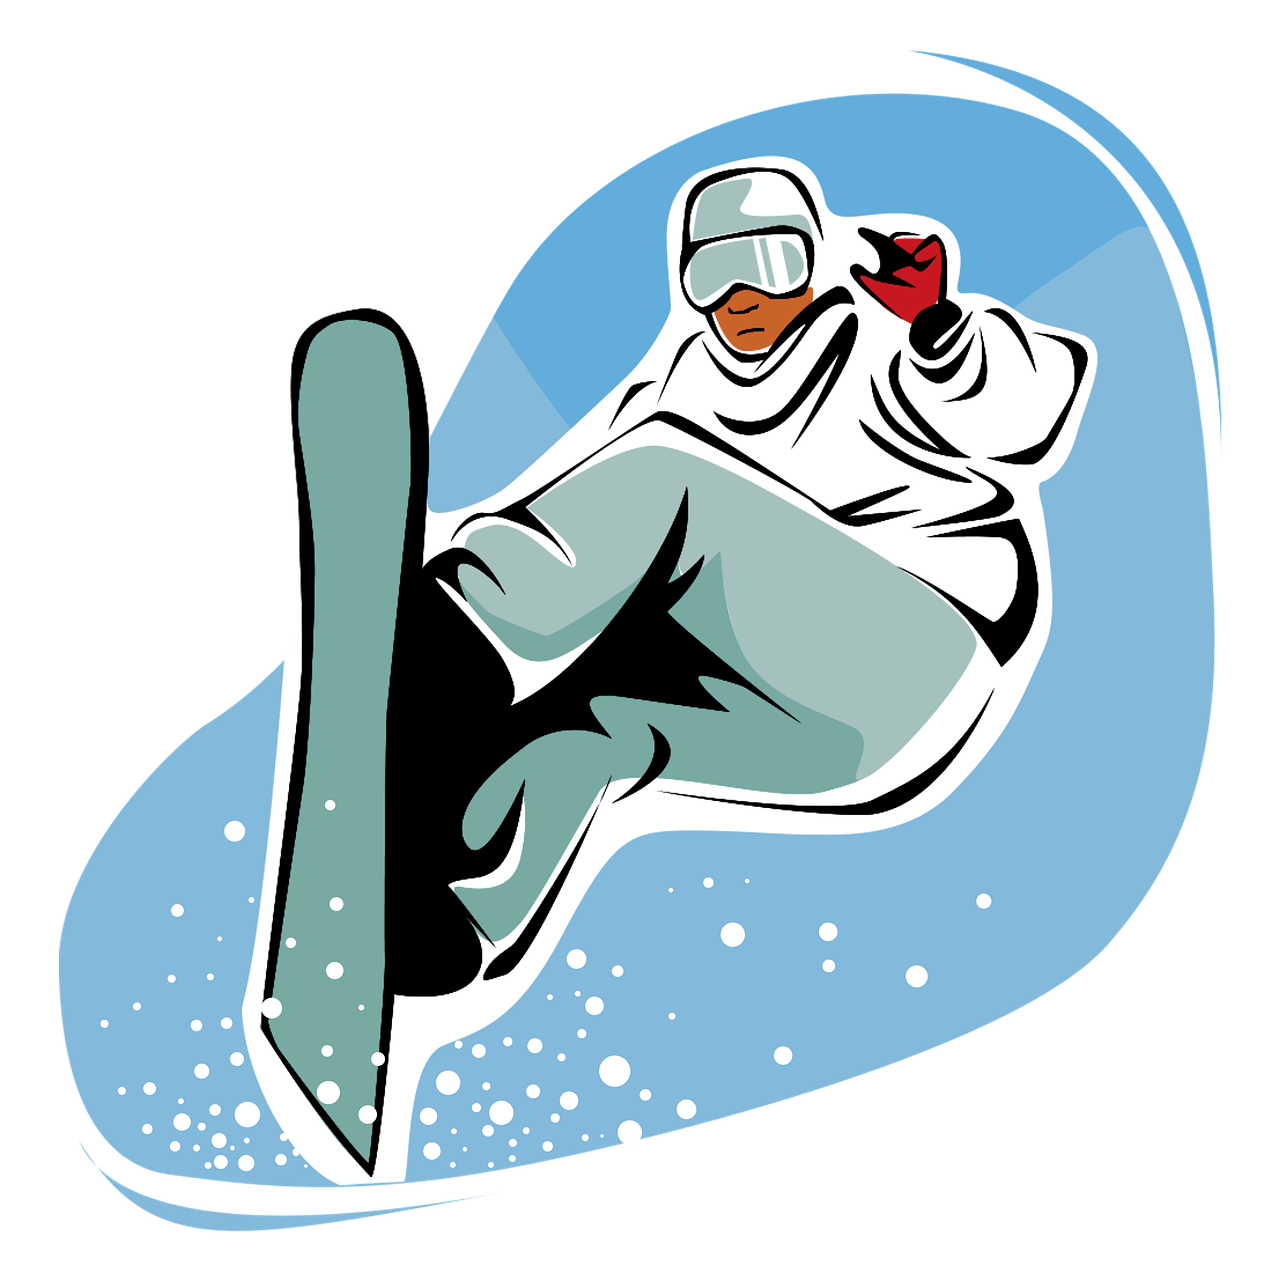 Skiing clipart snowboarding, Skiing snowboarding Transparent